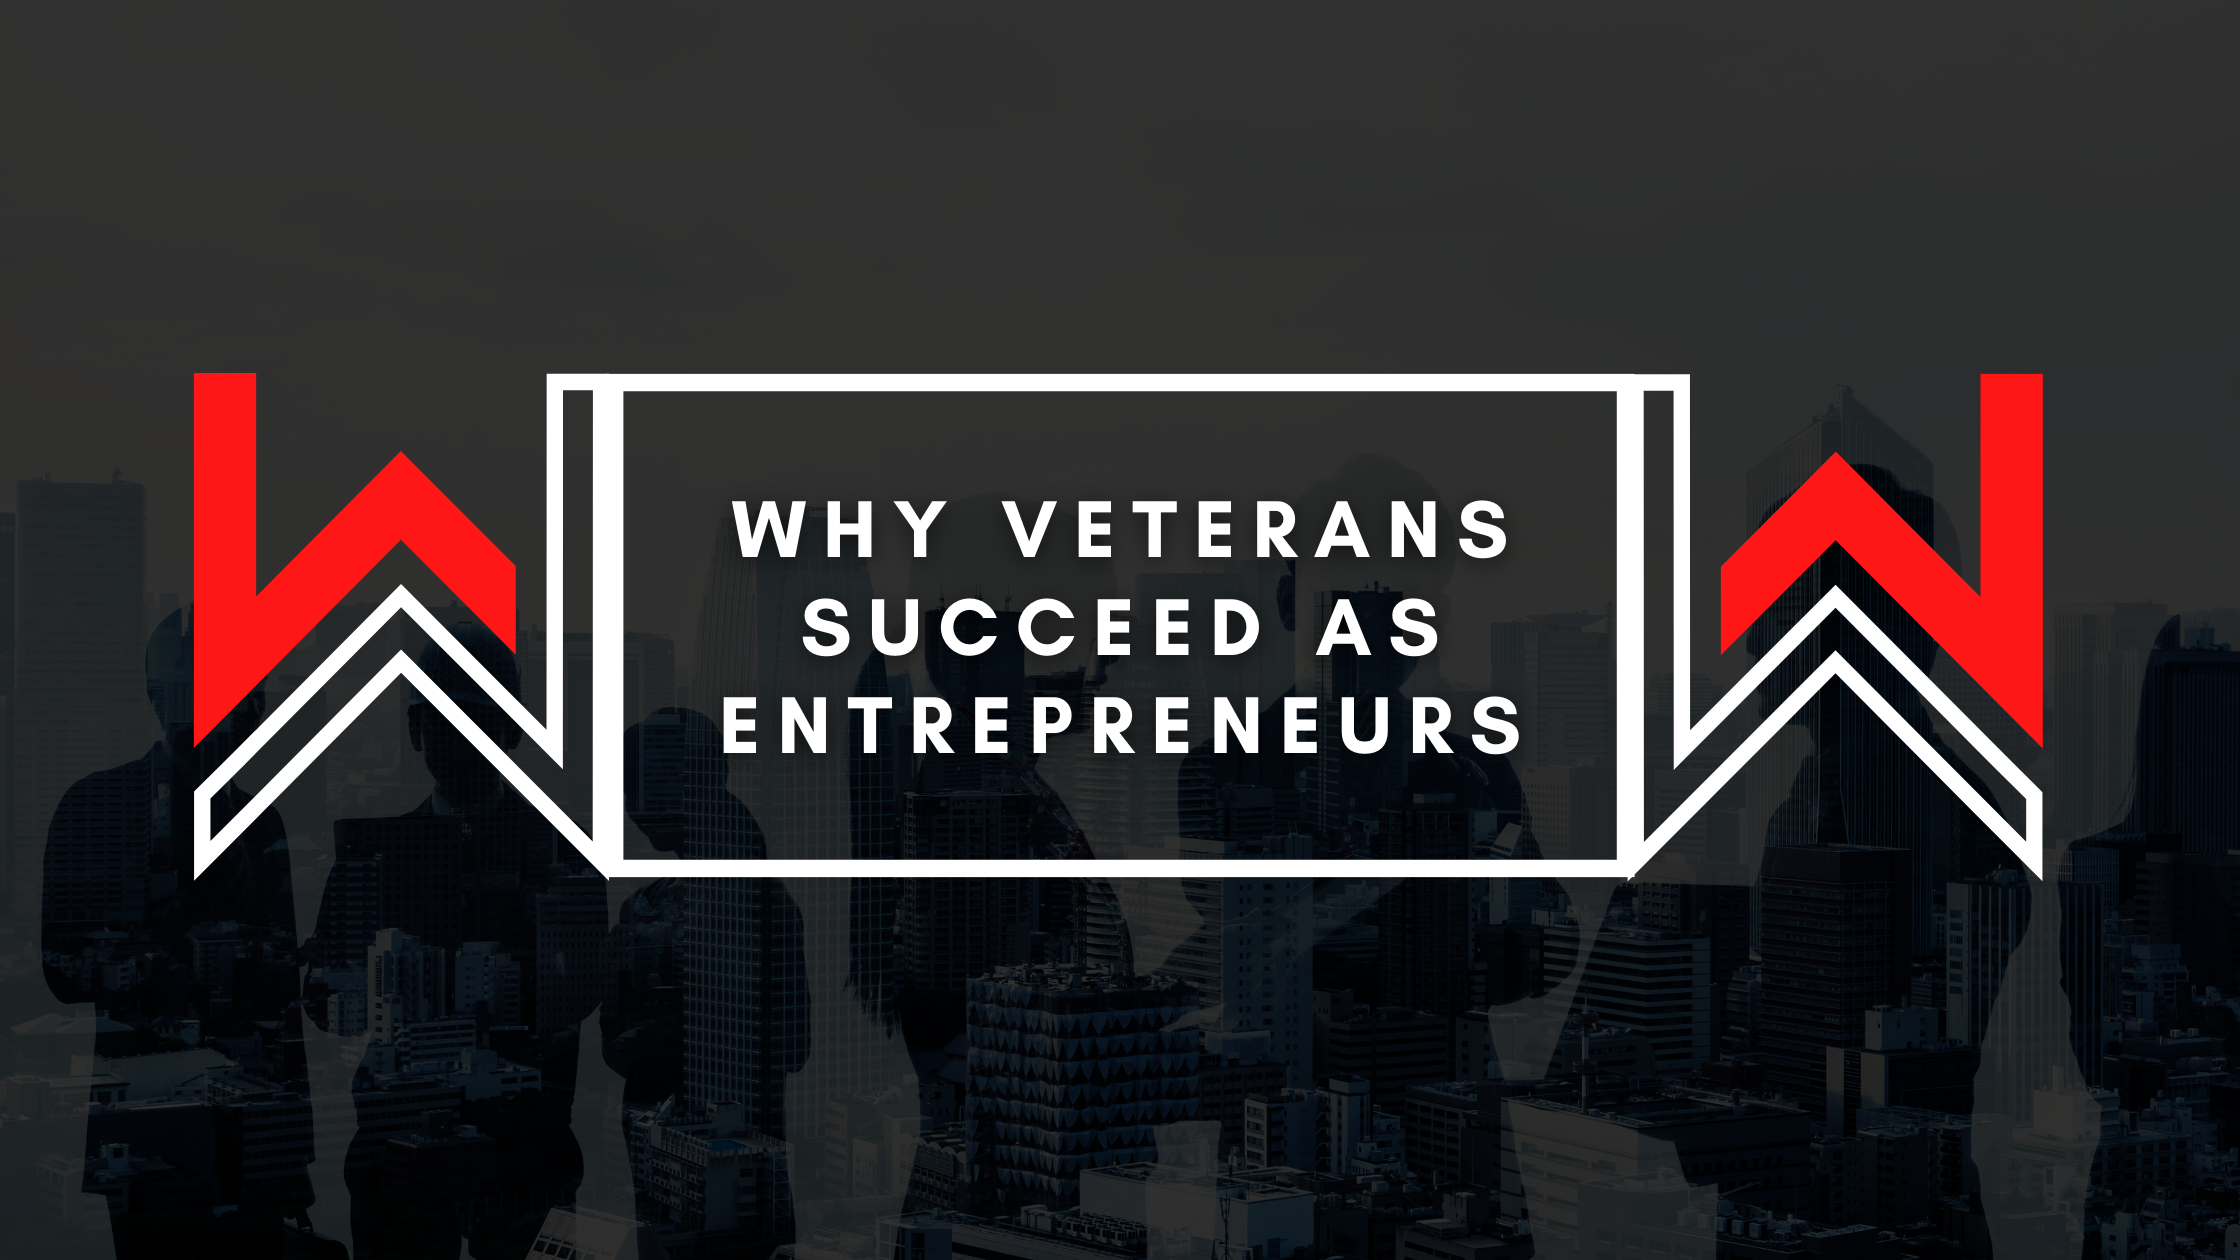 why veterans succeed as entrepreneurs - warrior wealth